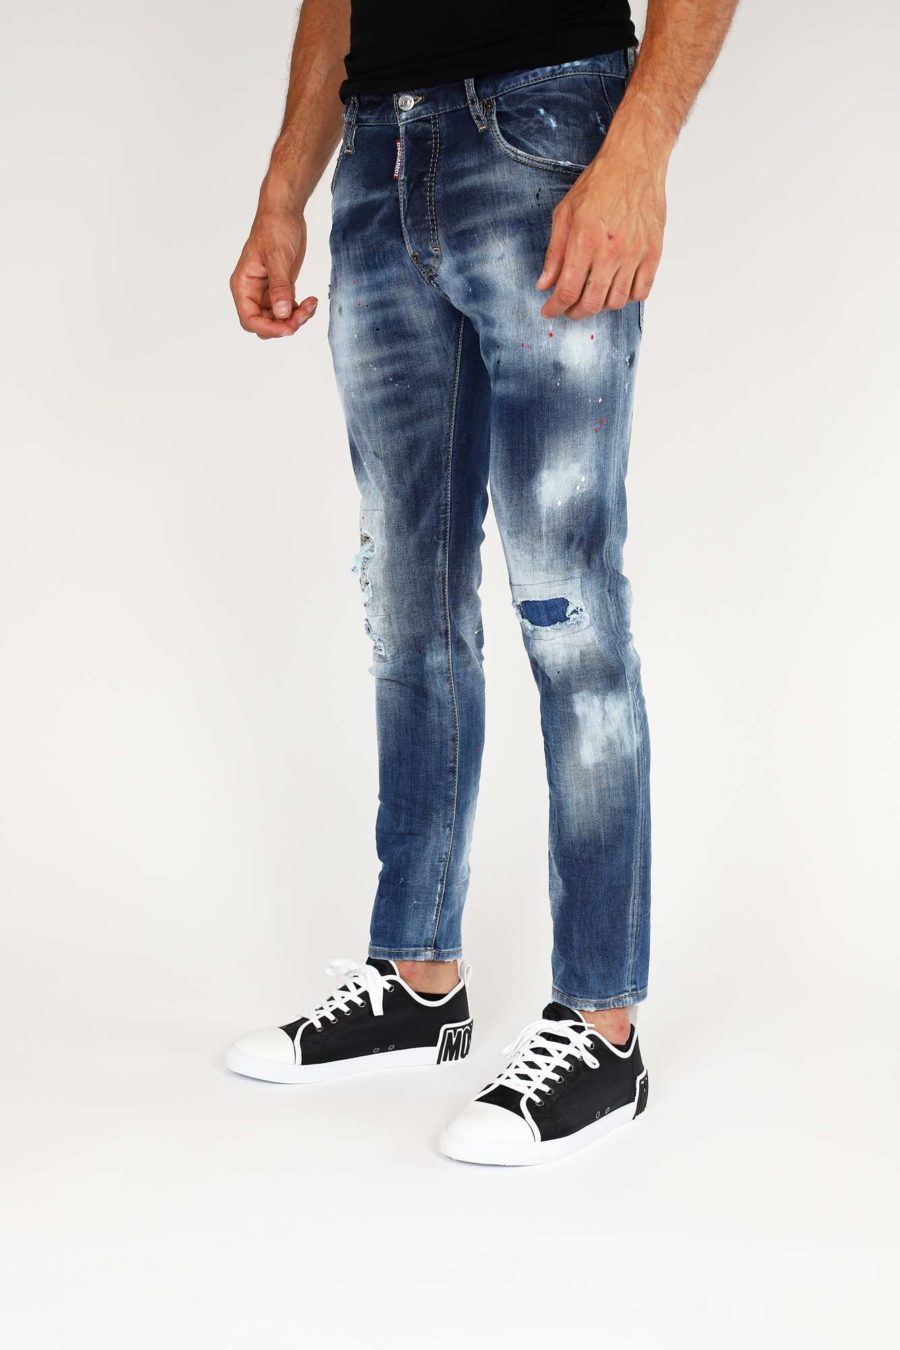 Jeans "Skater" azul con parche taches - IMG 9802